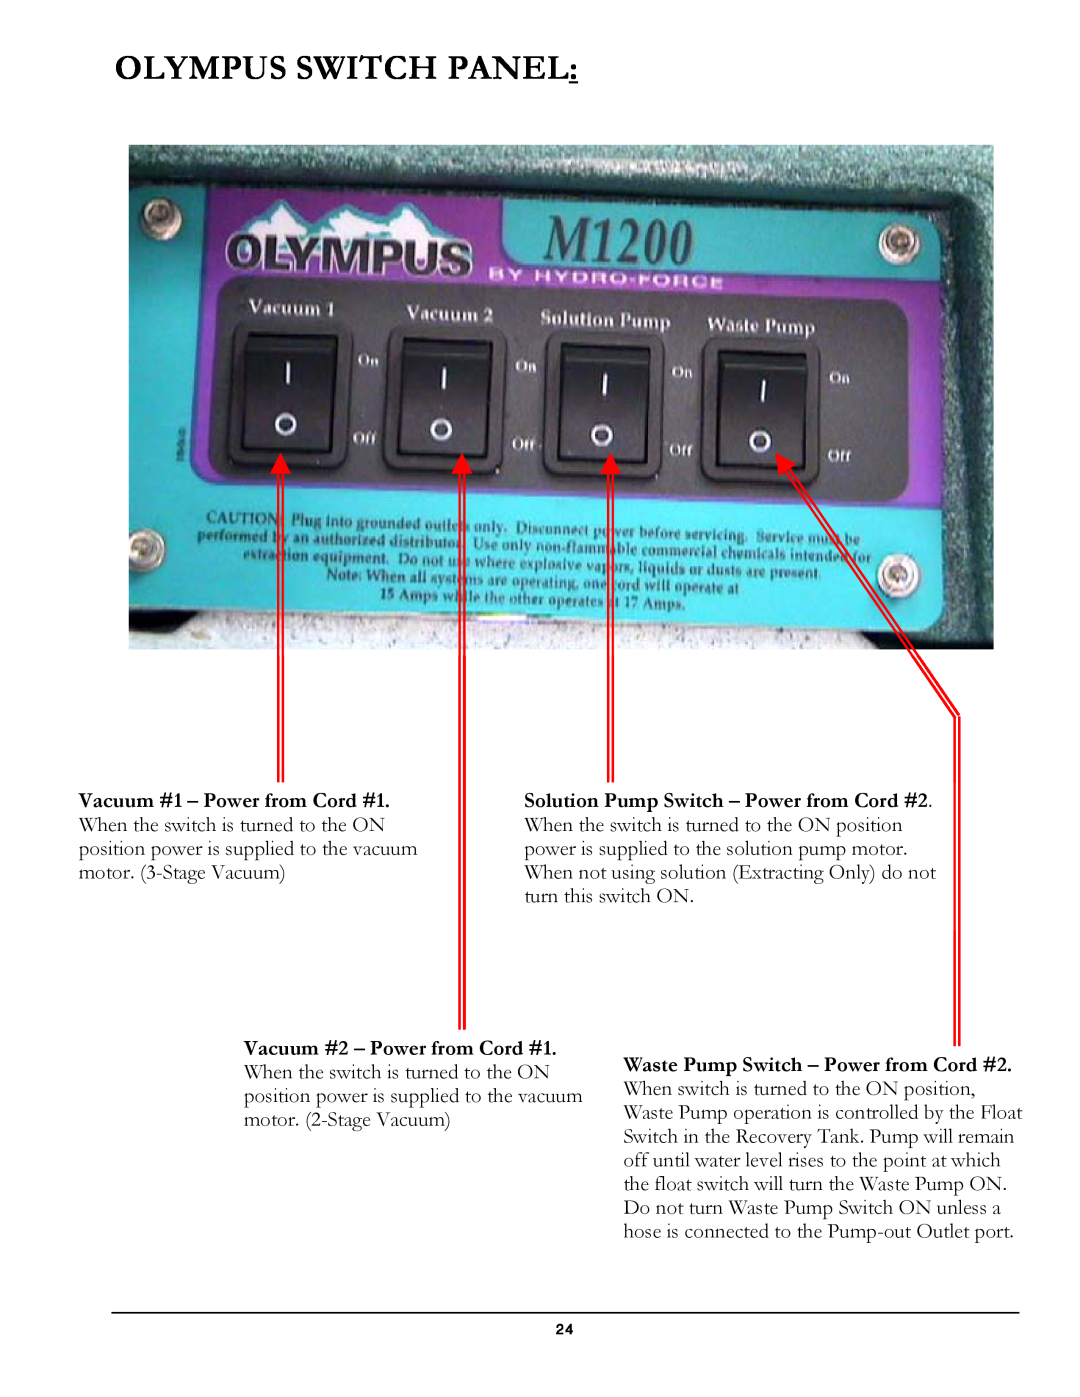 Olympus M1200 manual Olympus Switch Panel 